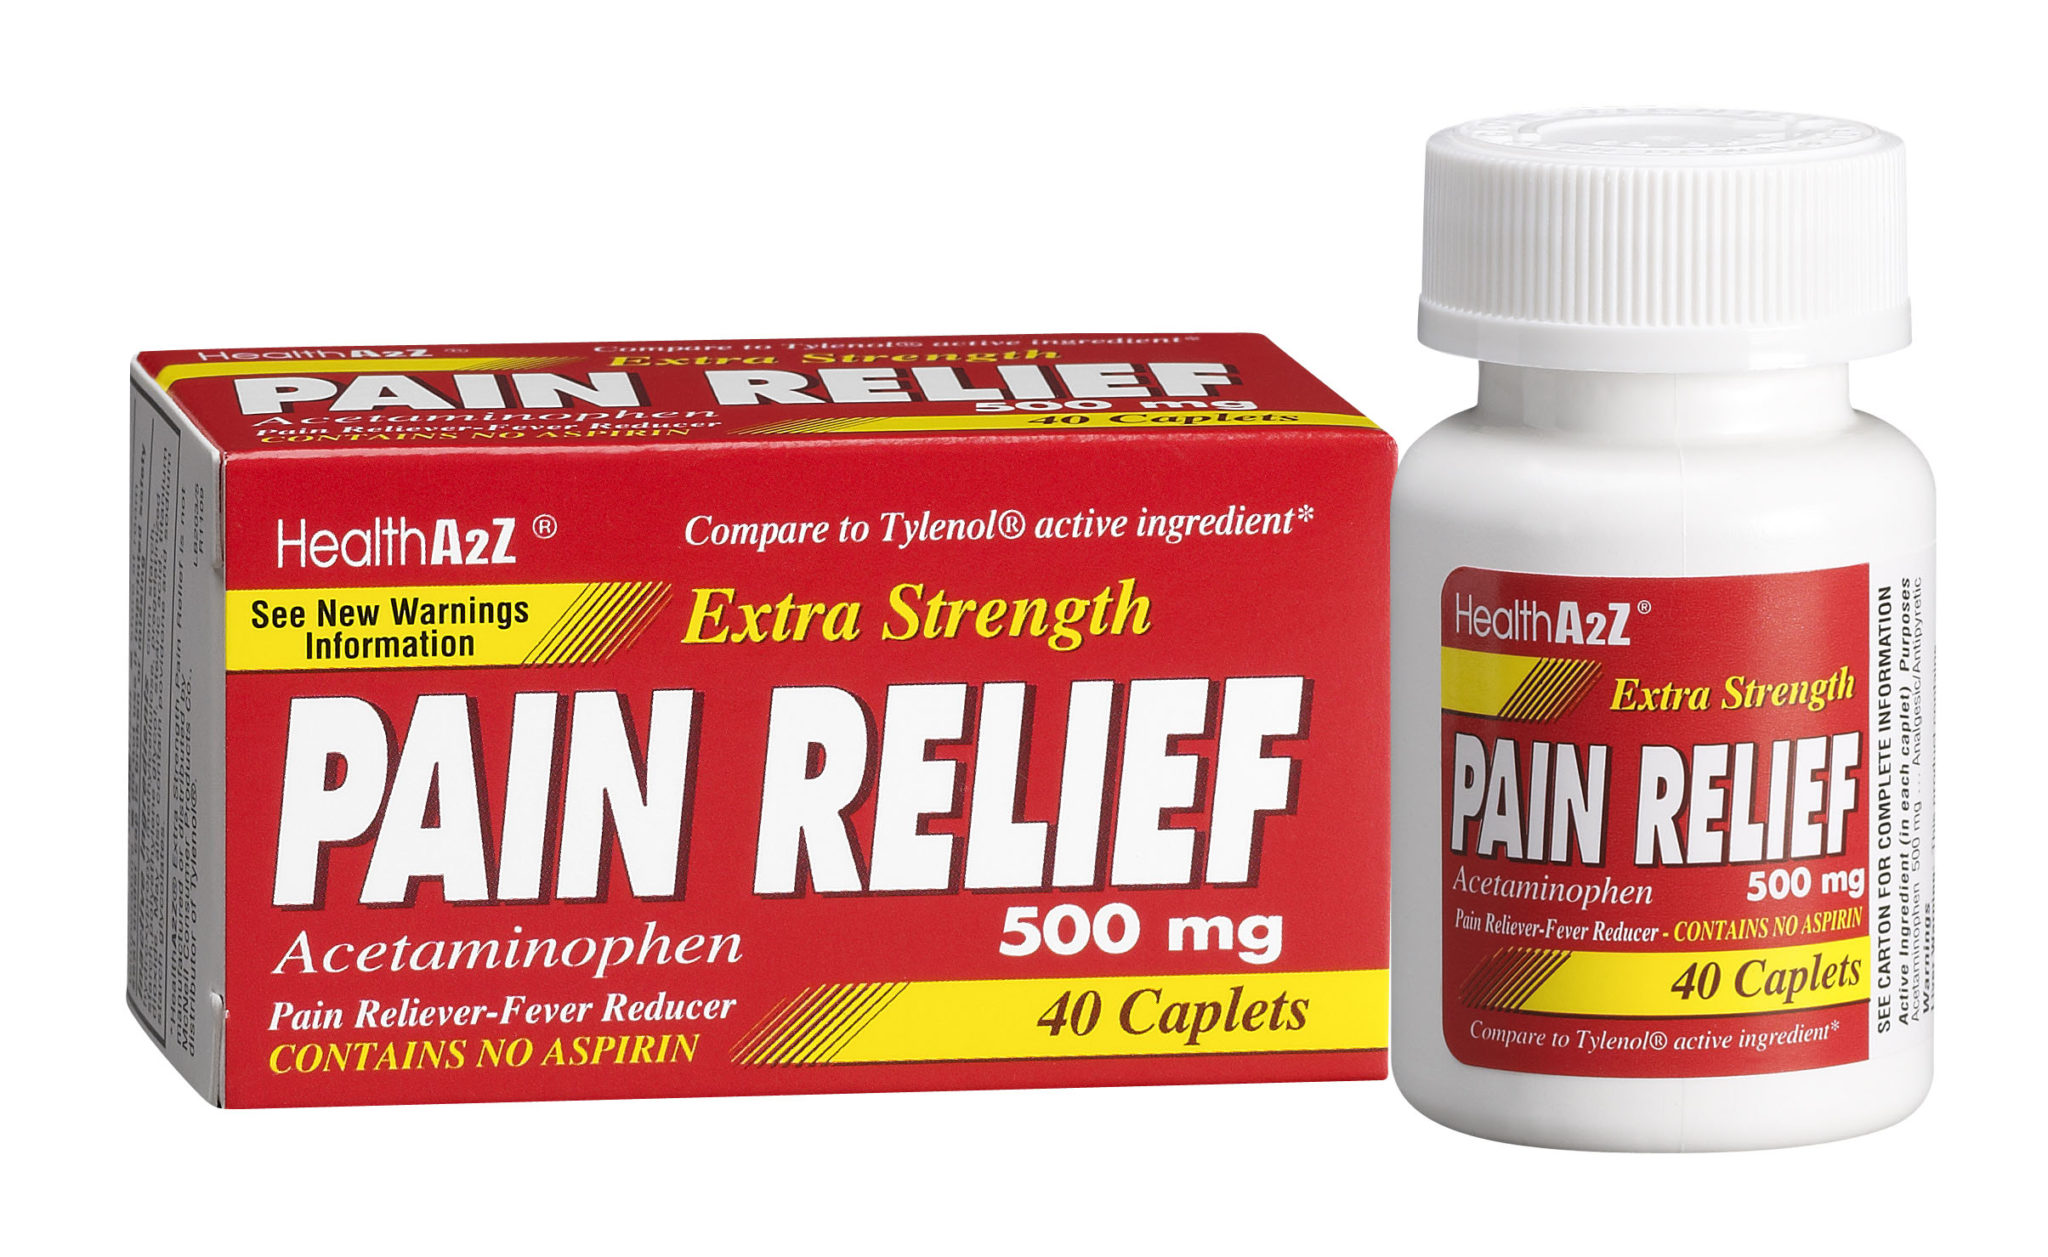 HealthA2Z Extra Strength Pain Relief Caplets